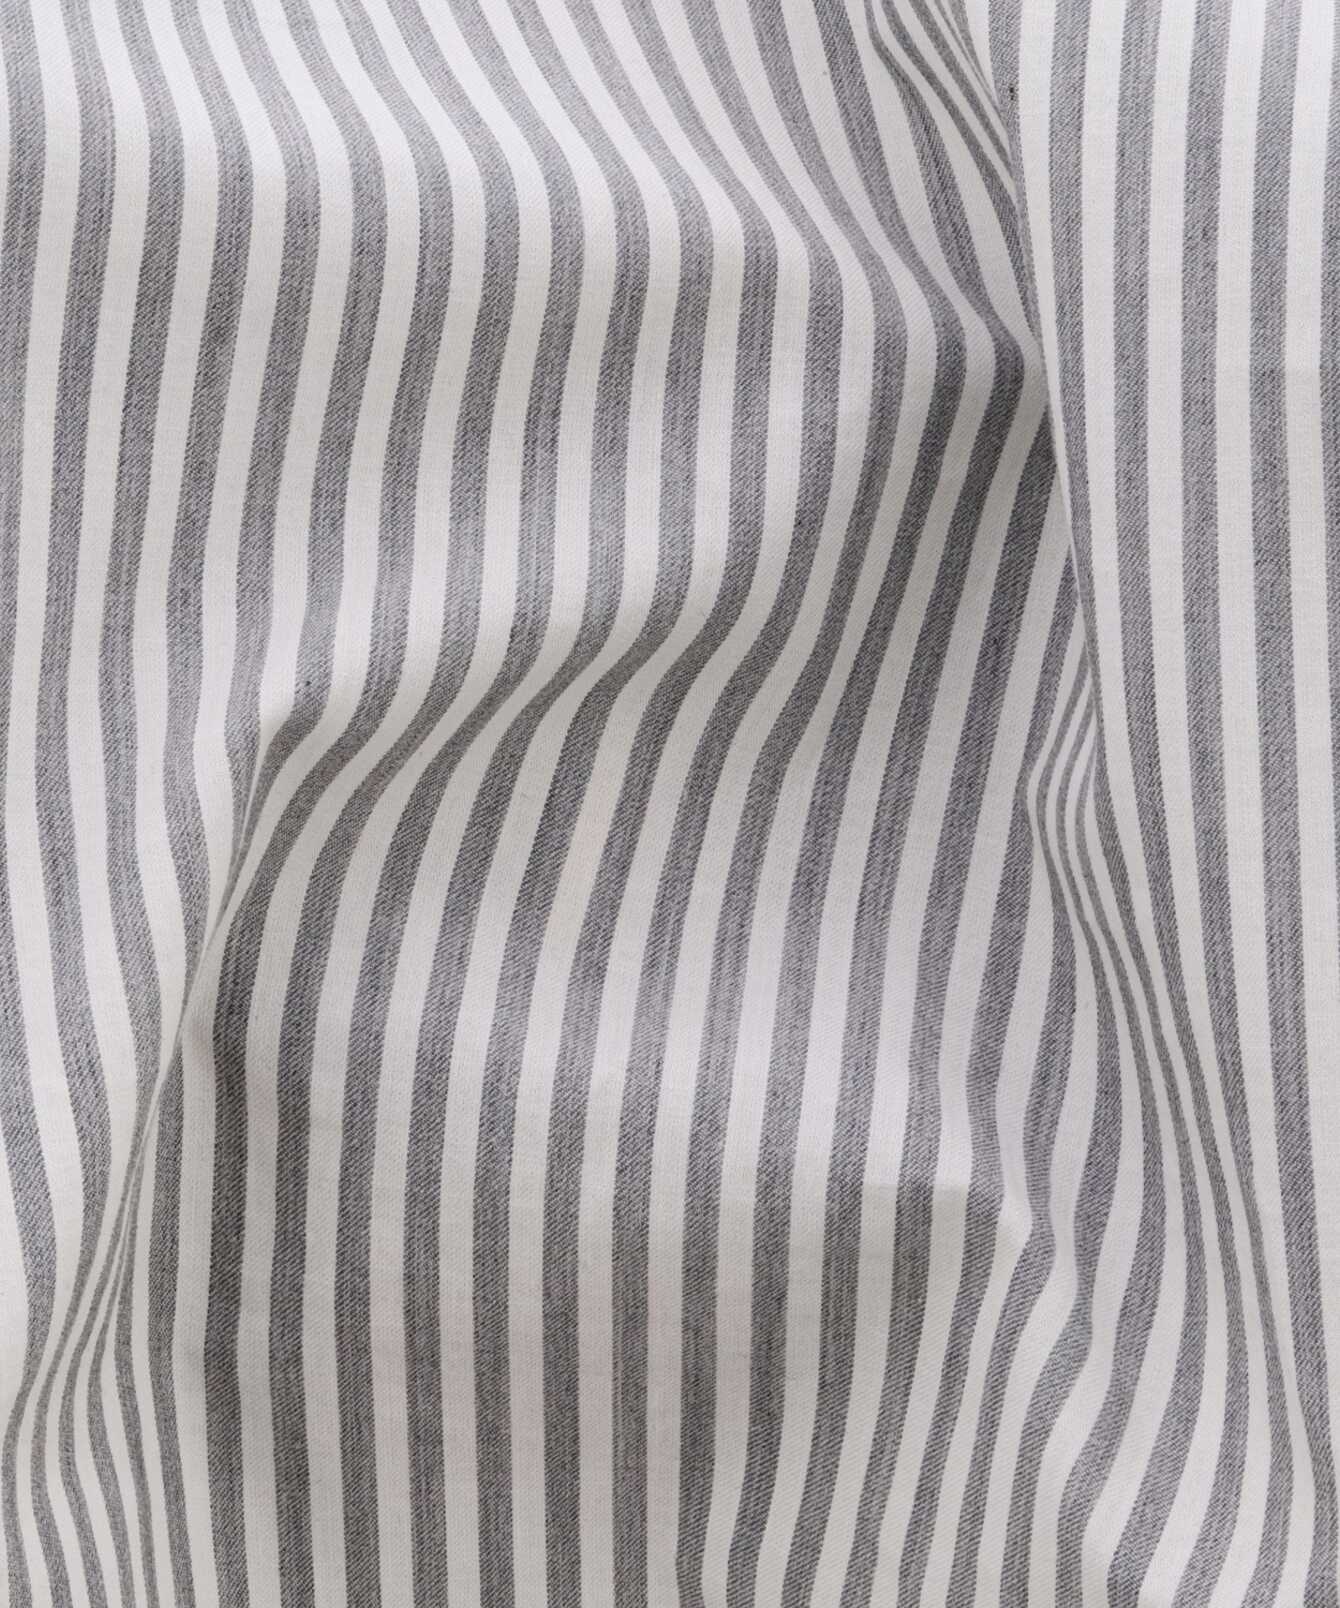 Shirt Montmelo Grey Striped Twill Shirt The Shirt Factory